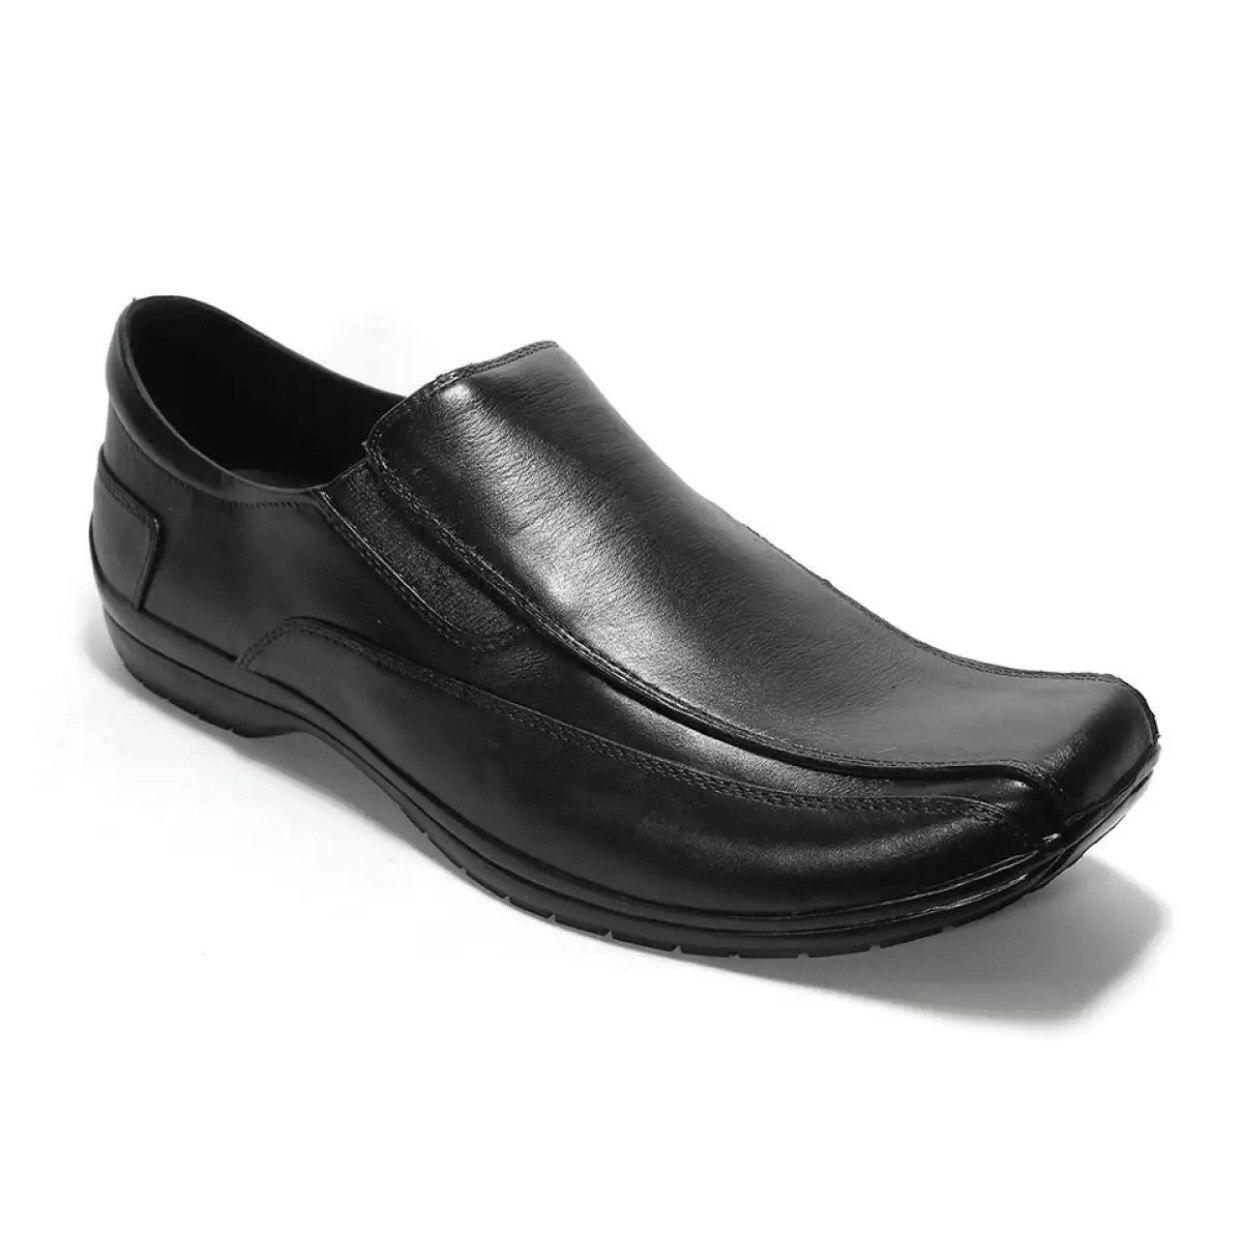 Easysoft Black Shoes | peacecommission.kdsg.gov.ng